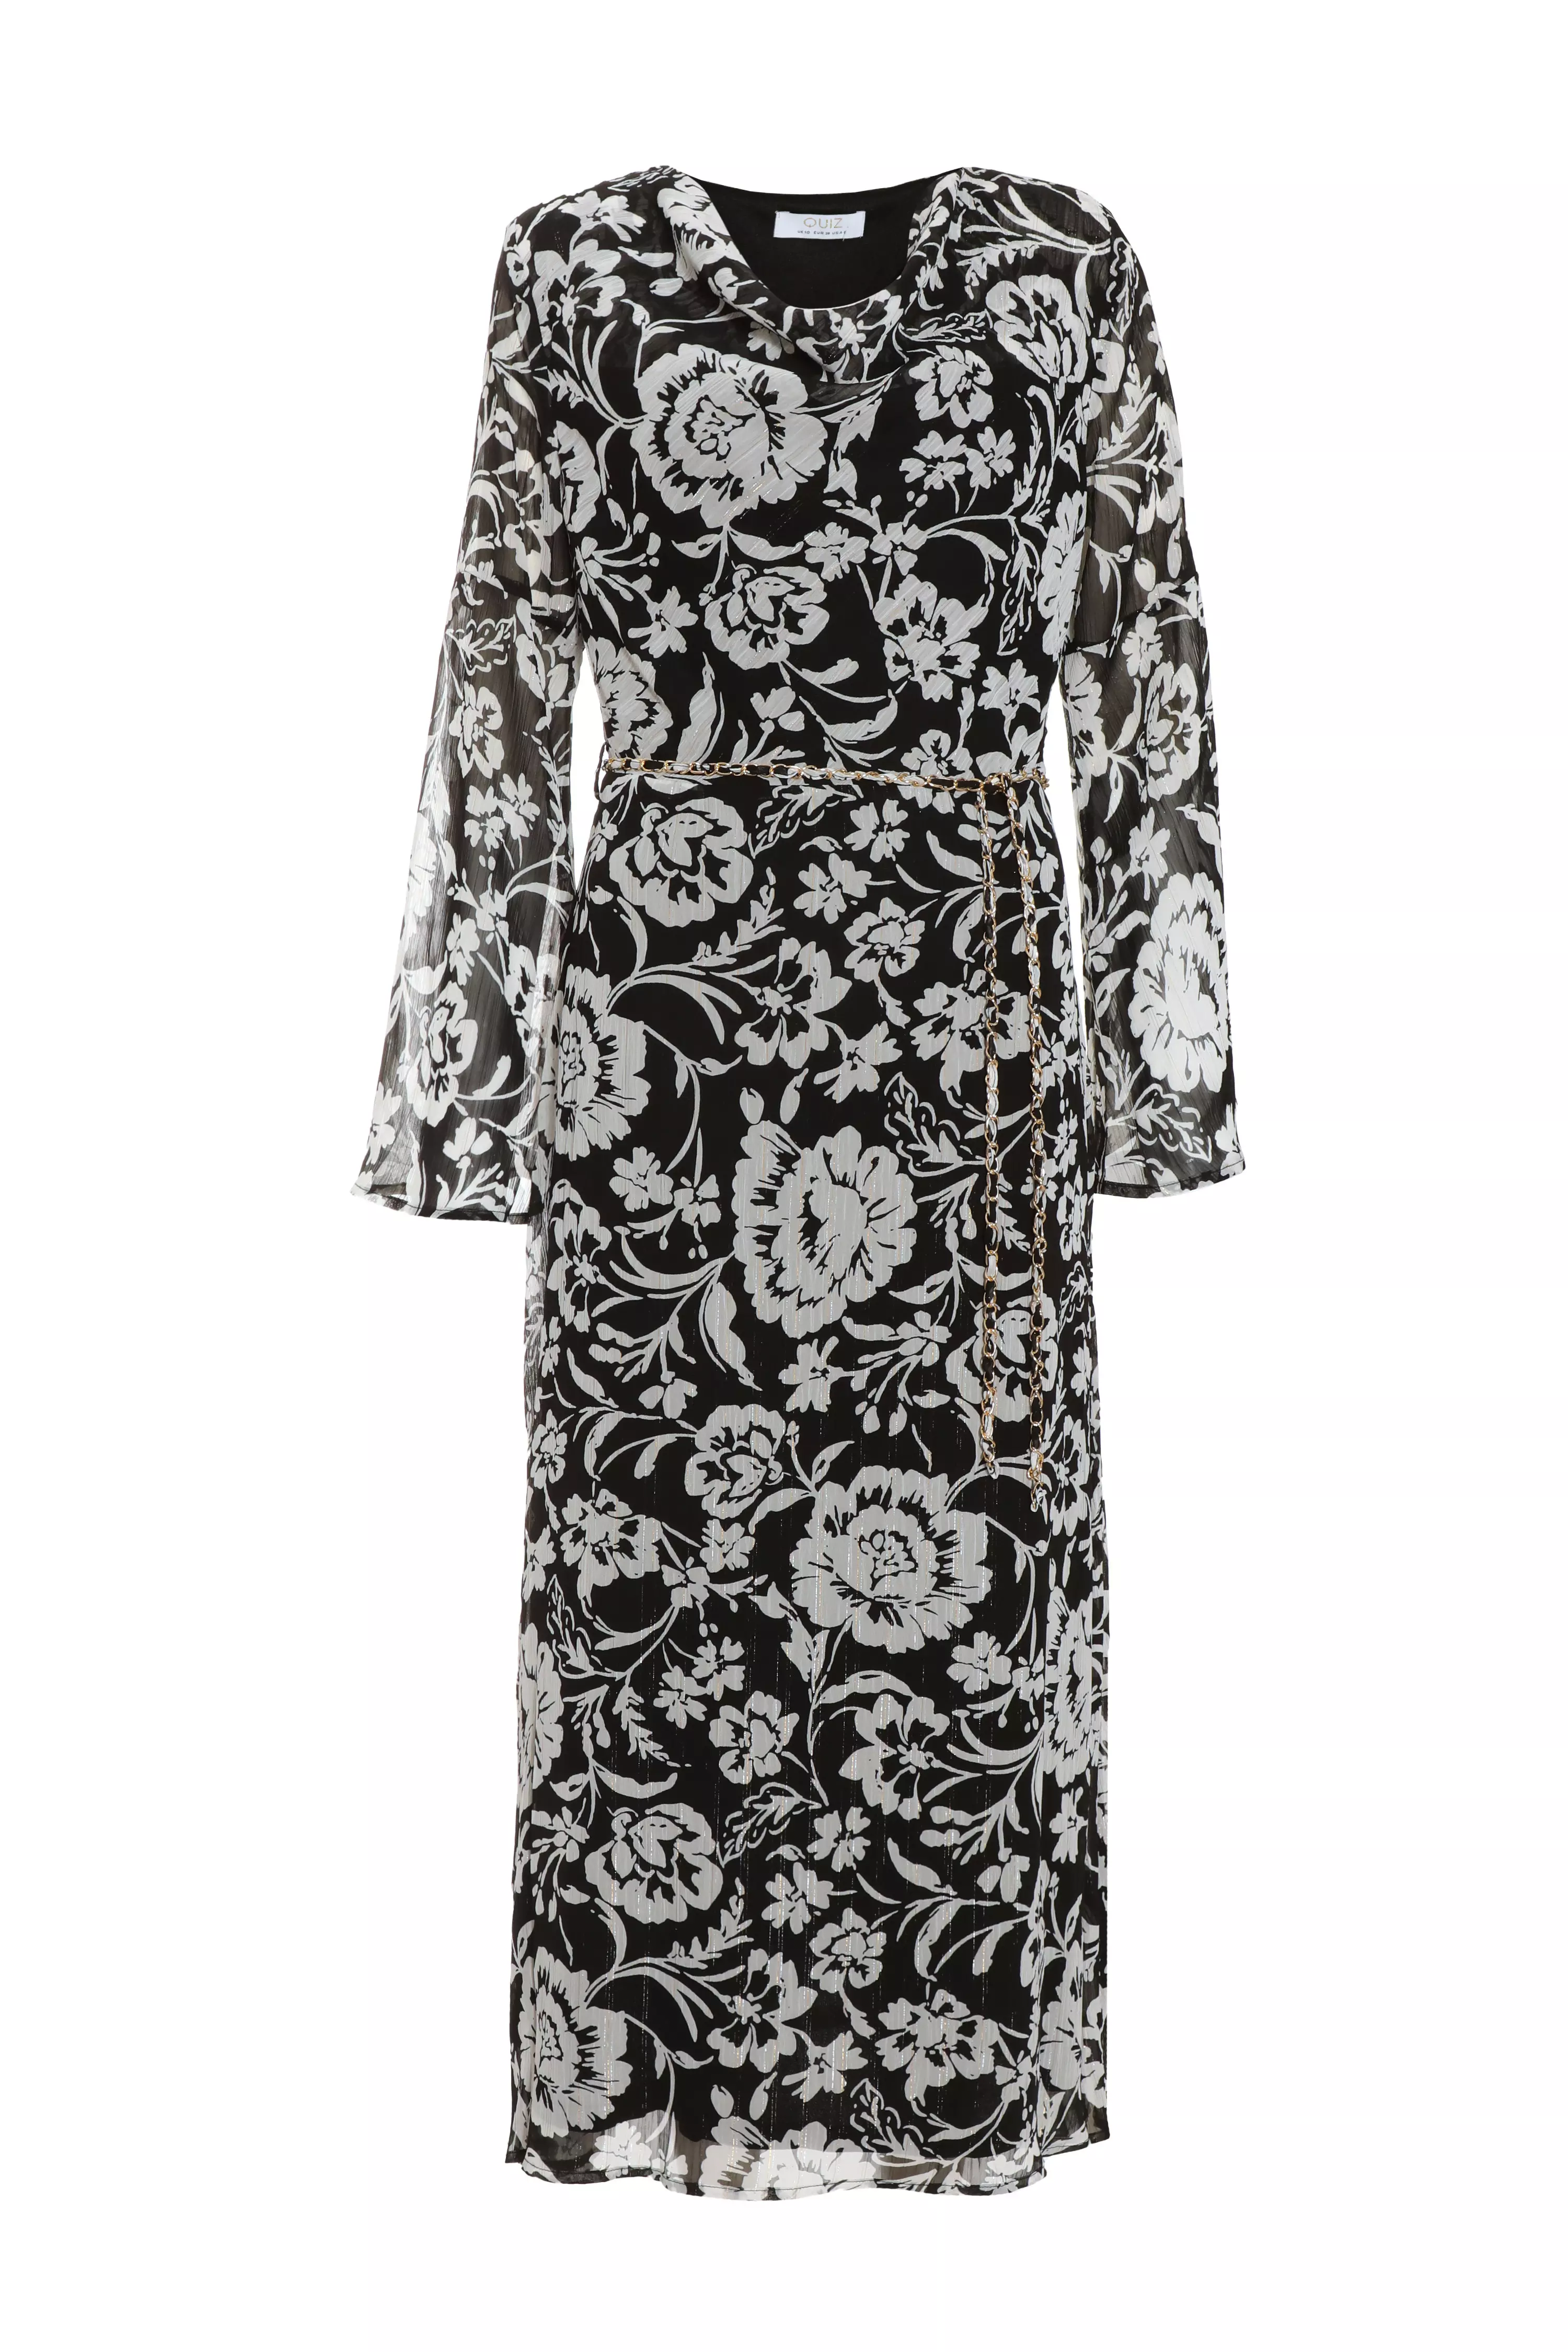 Black Floral Chiffon Wrap Midi Dress - QUIZ Clothing